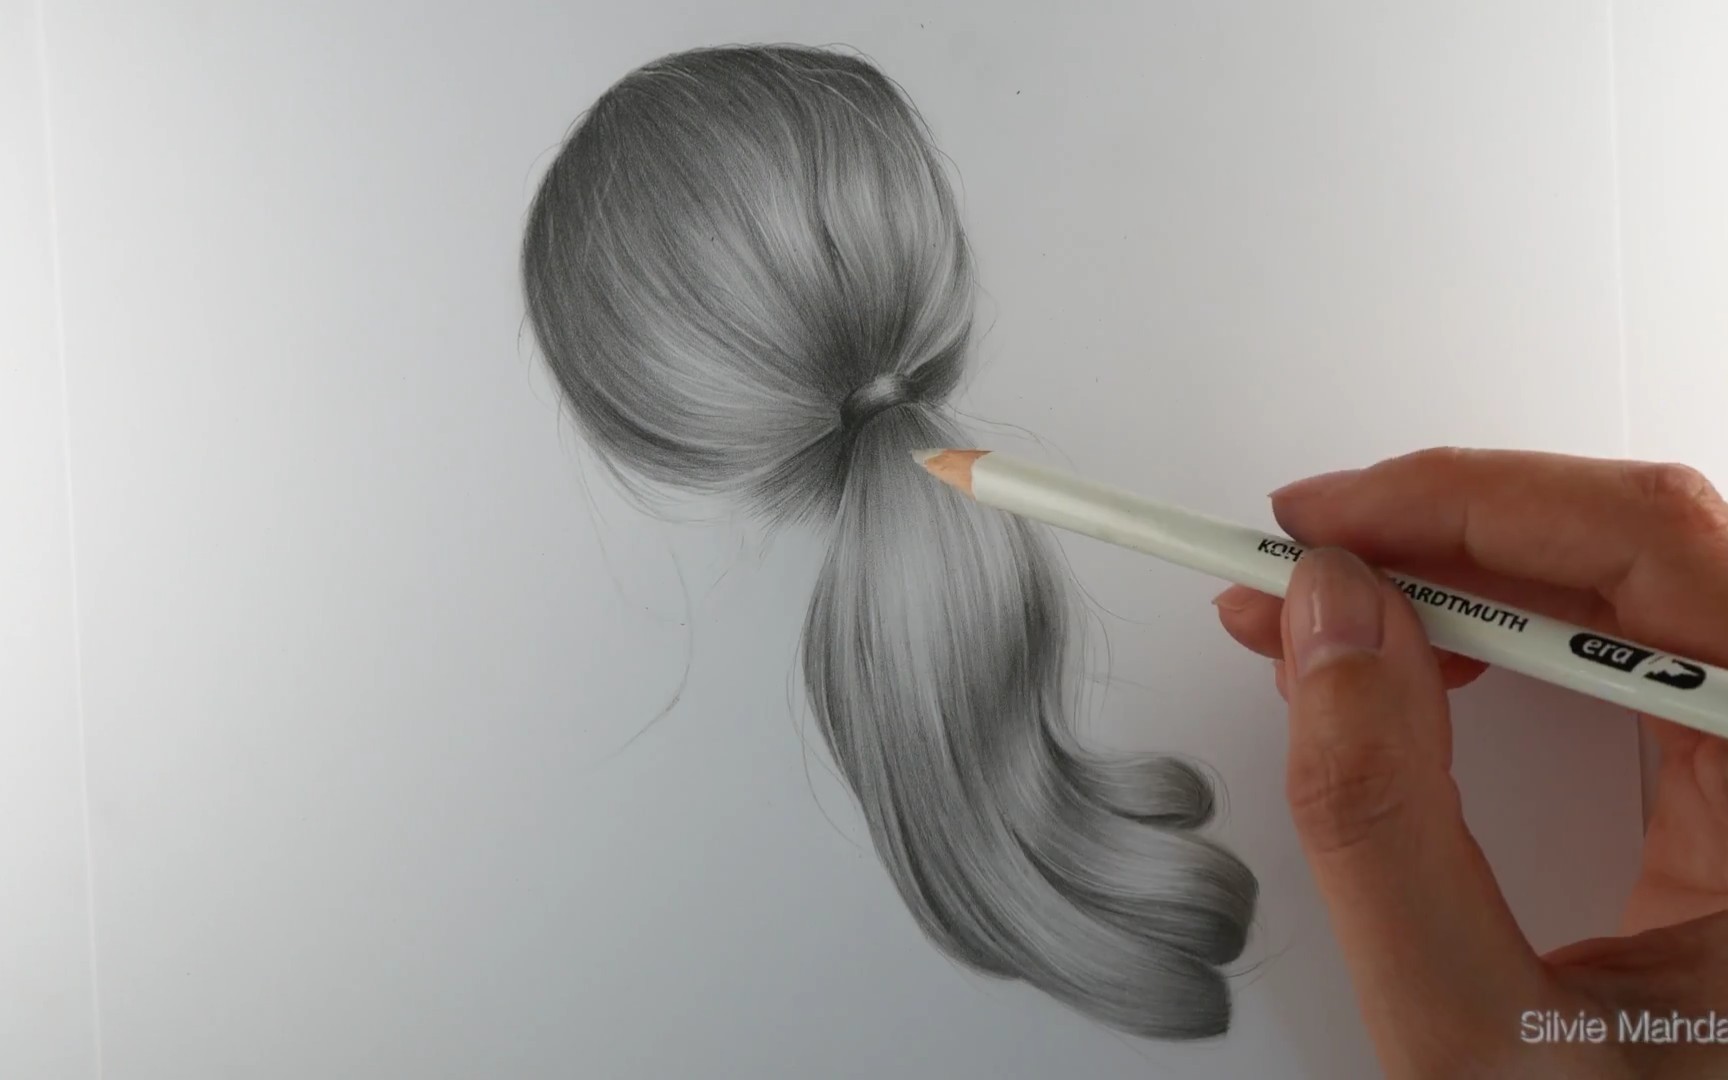 silvie mahdal教你用铅笔绘画超写实渐变高光头发